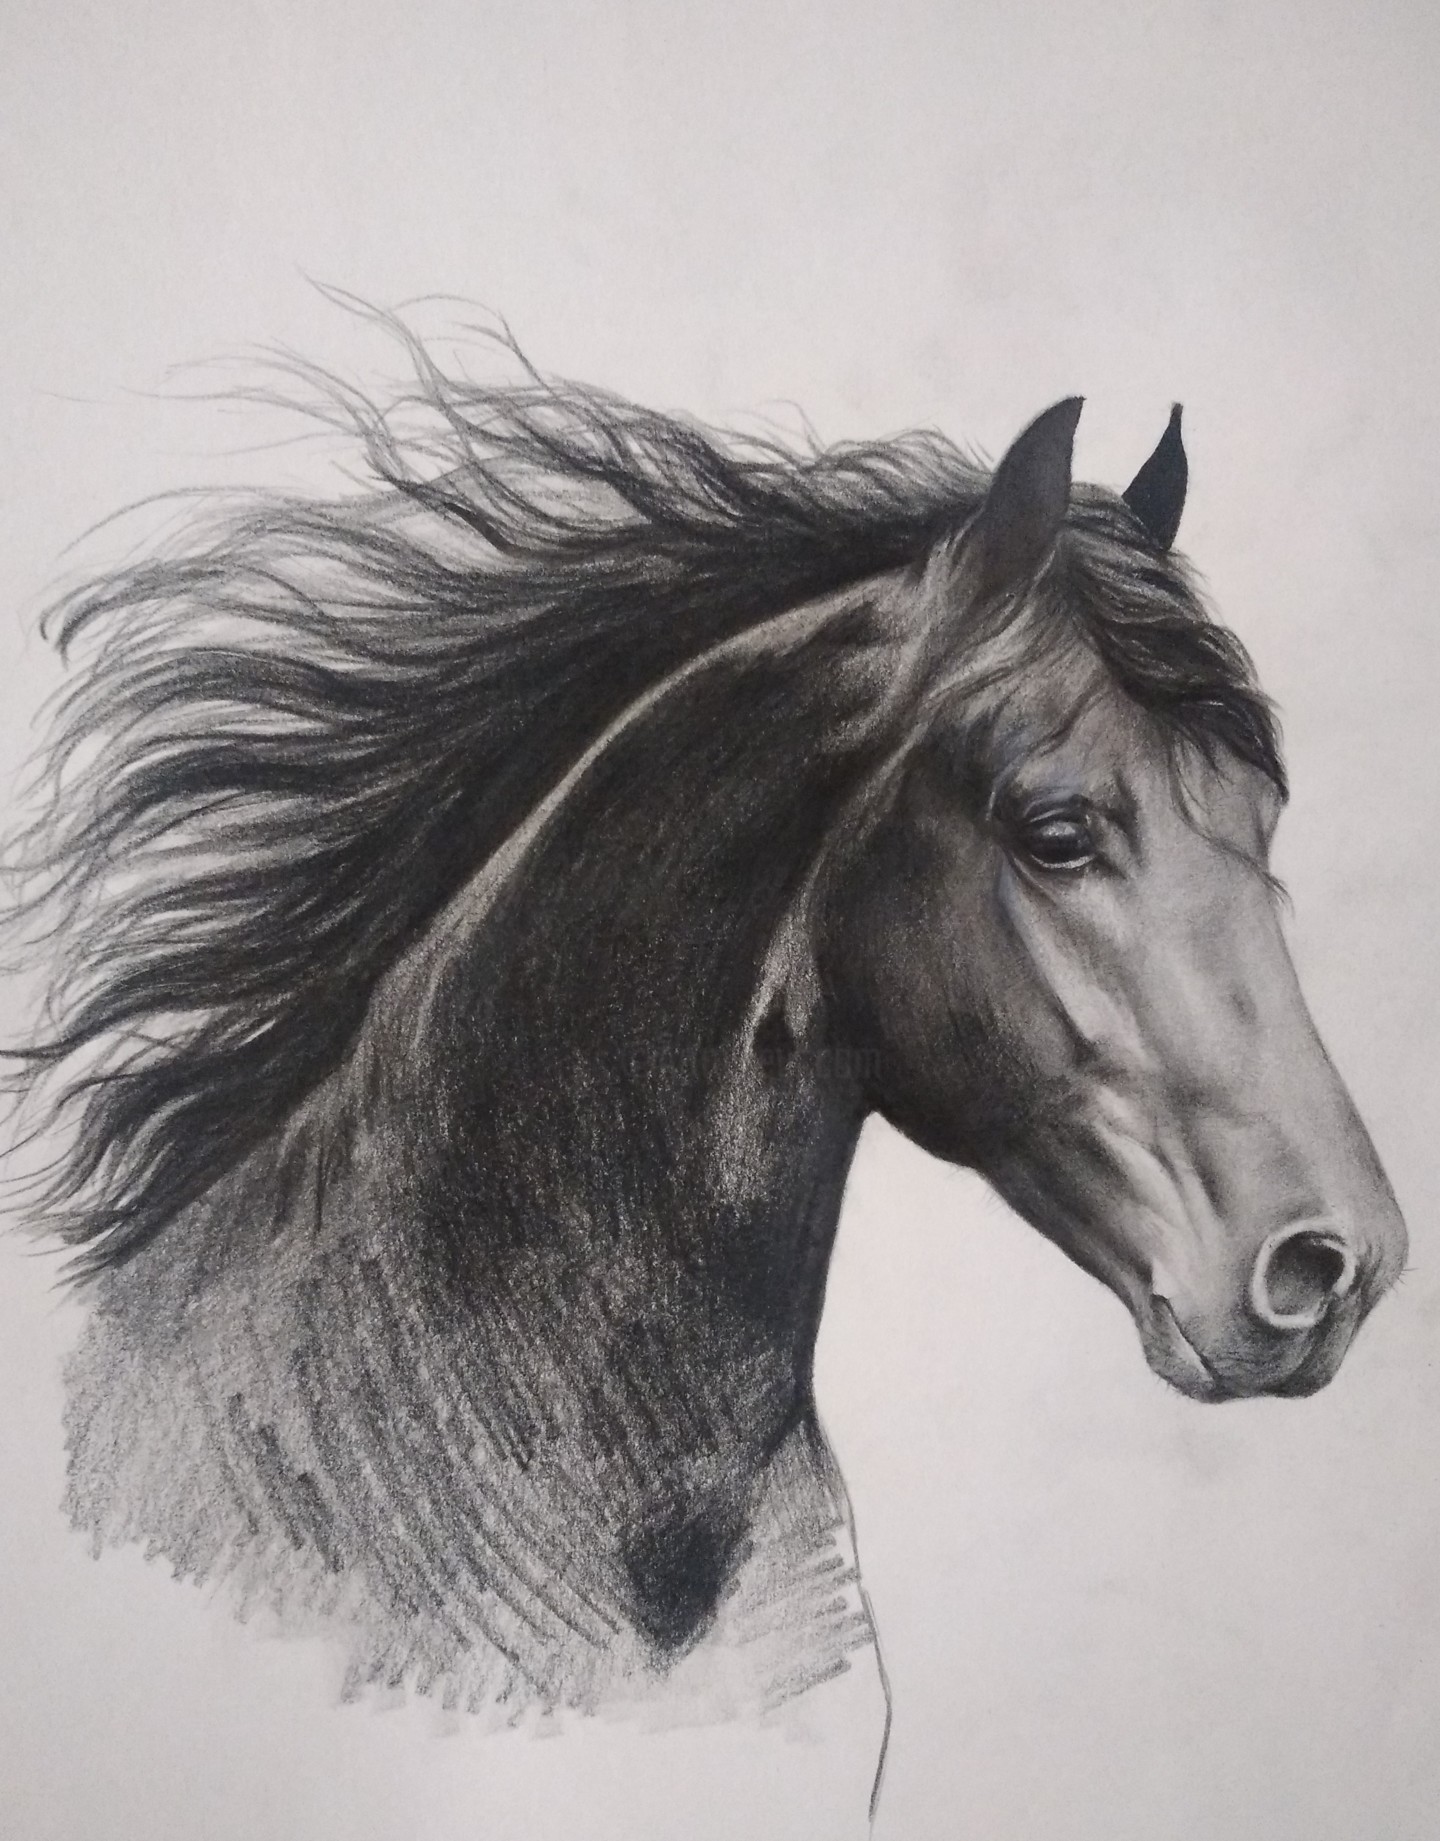 horse black and white art